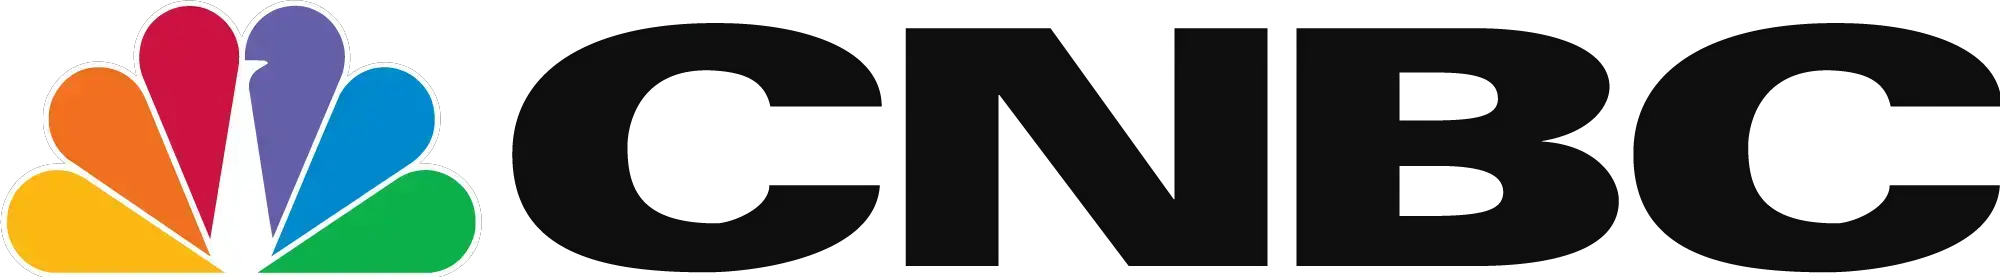 1684122132cnbc logo black